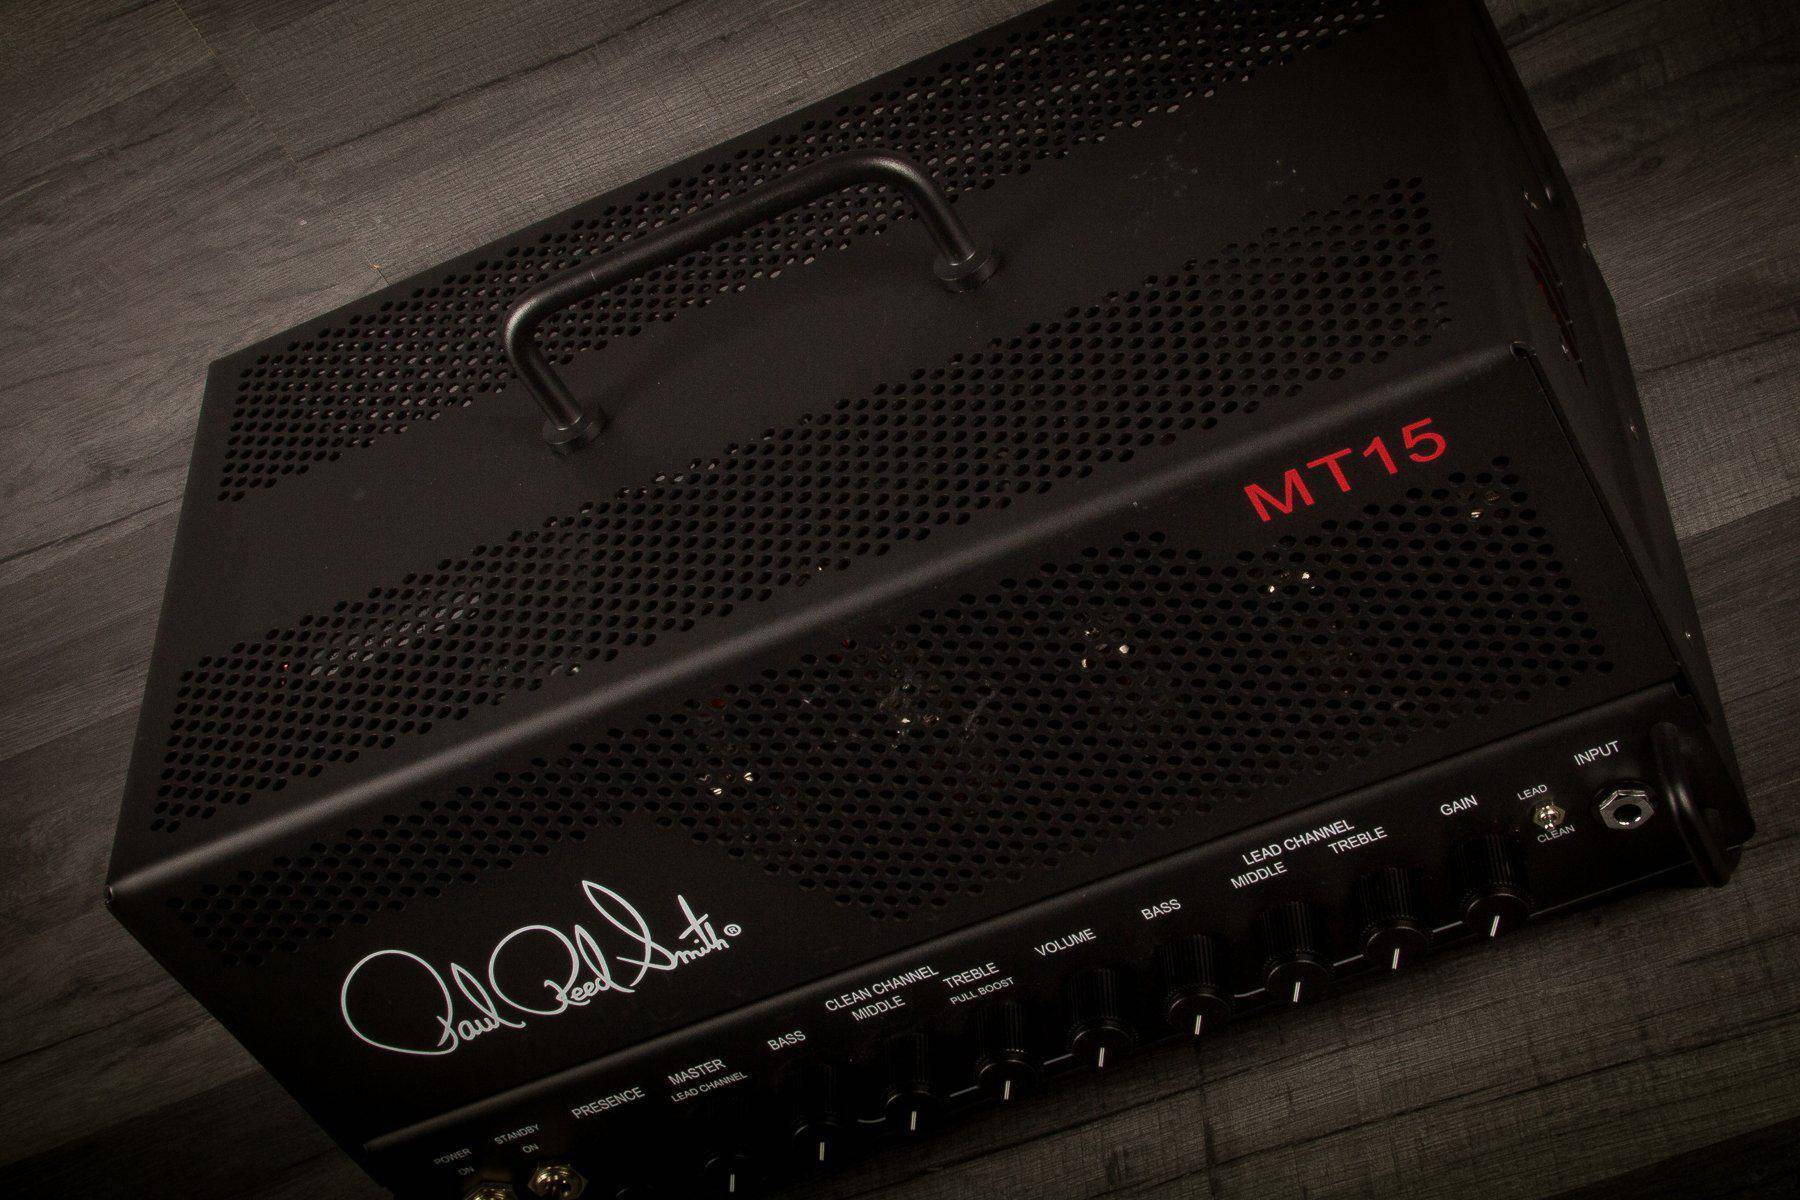 PRS MT15 Mark Tremonti Signature Amplifier Head - MusicStreet